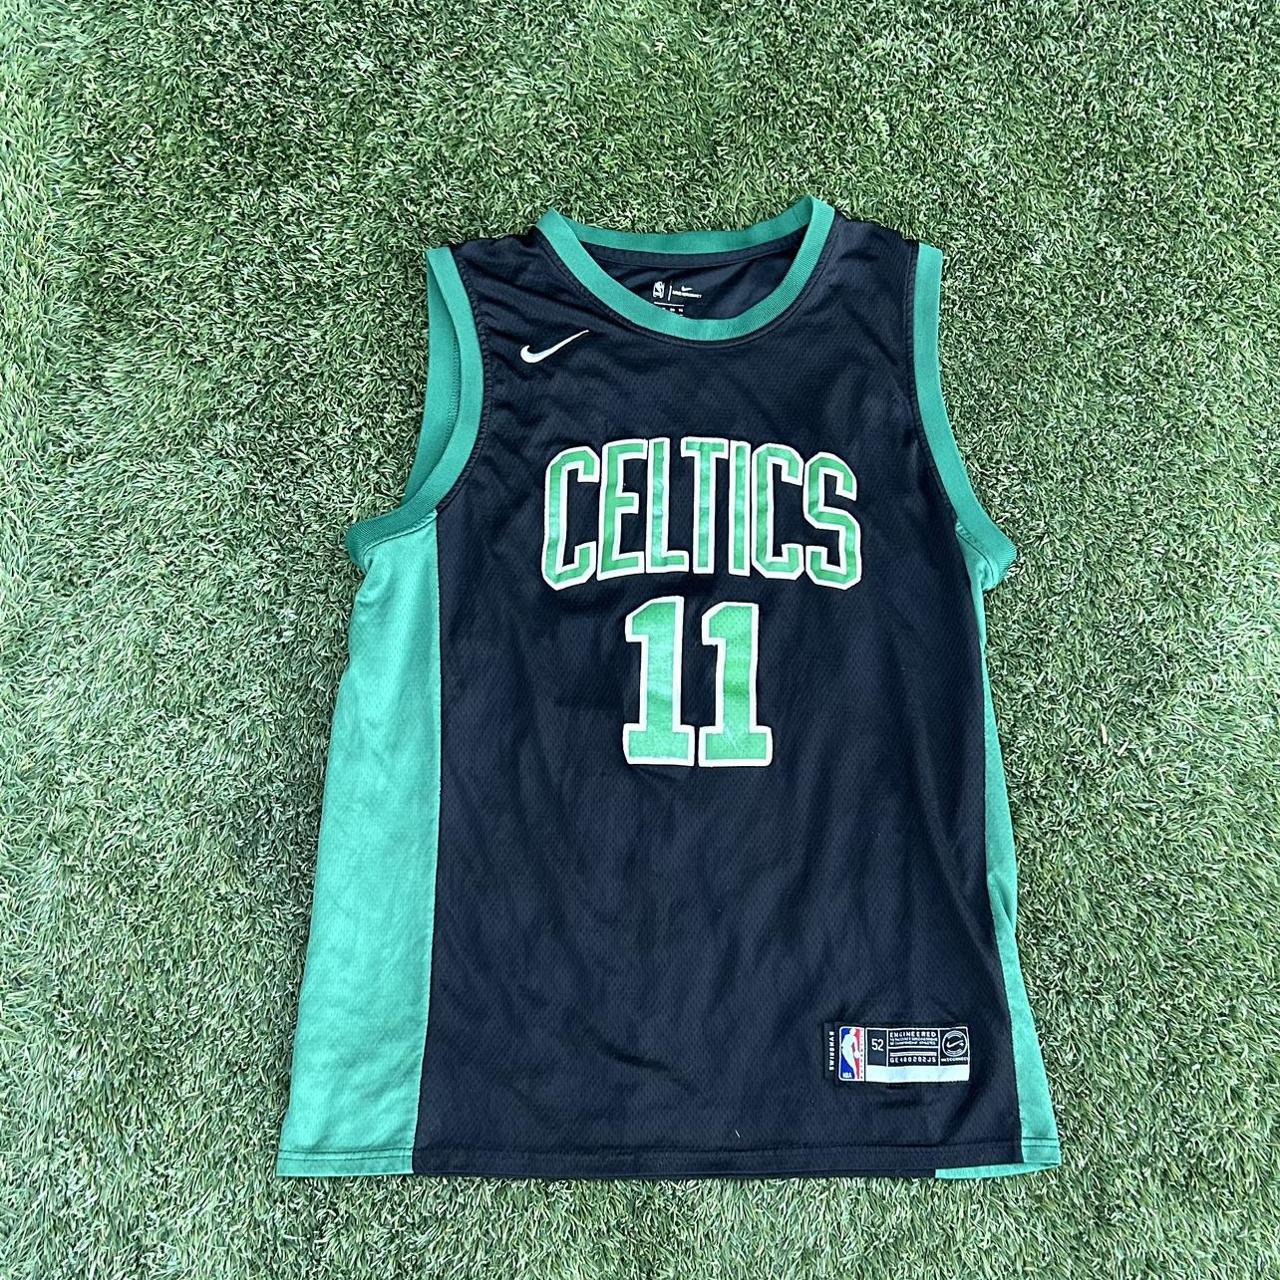 Nba Nike Boston Celtics Jersey Kyrie Irving Green and Gray Mens